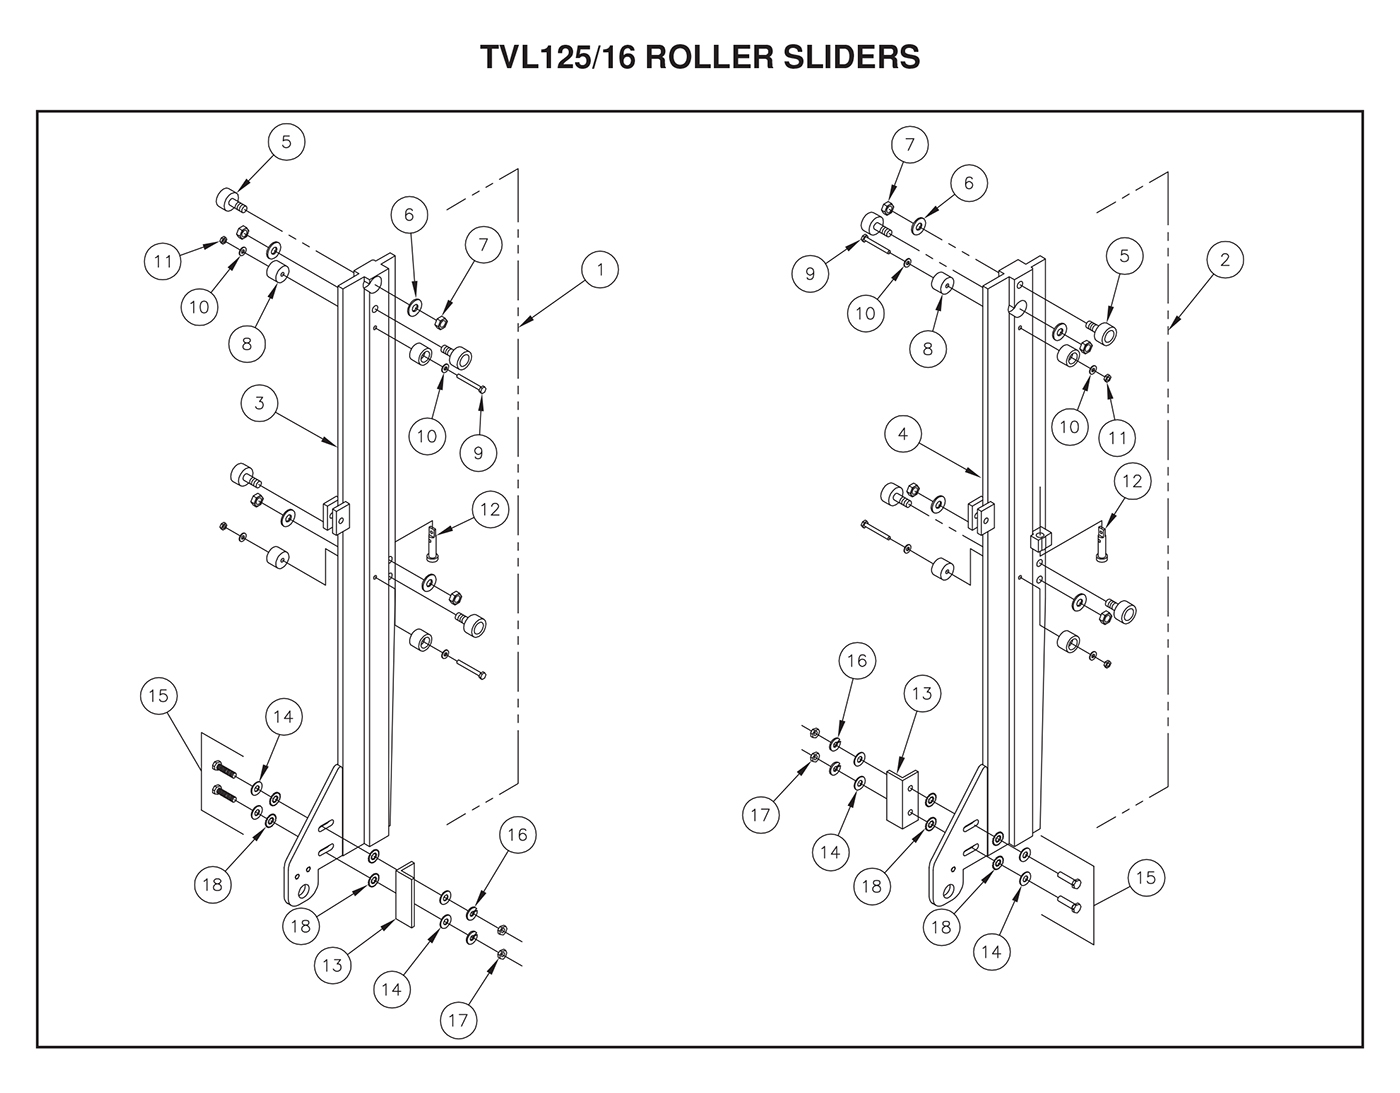 All-Aluminum TVL Series Roller Sliders Diagram